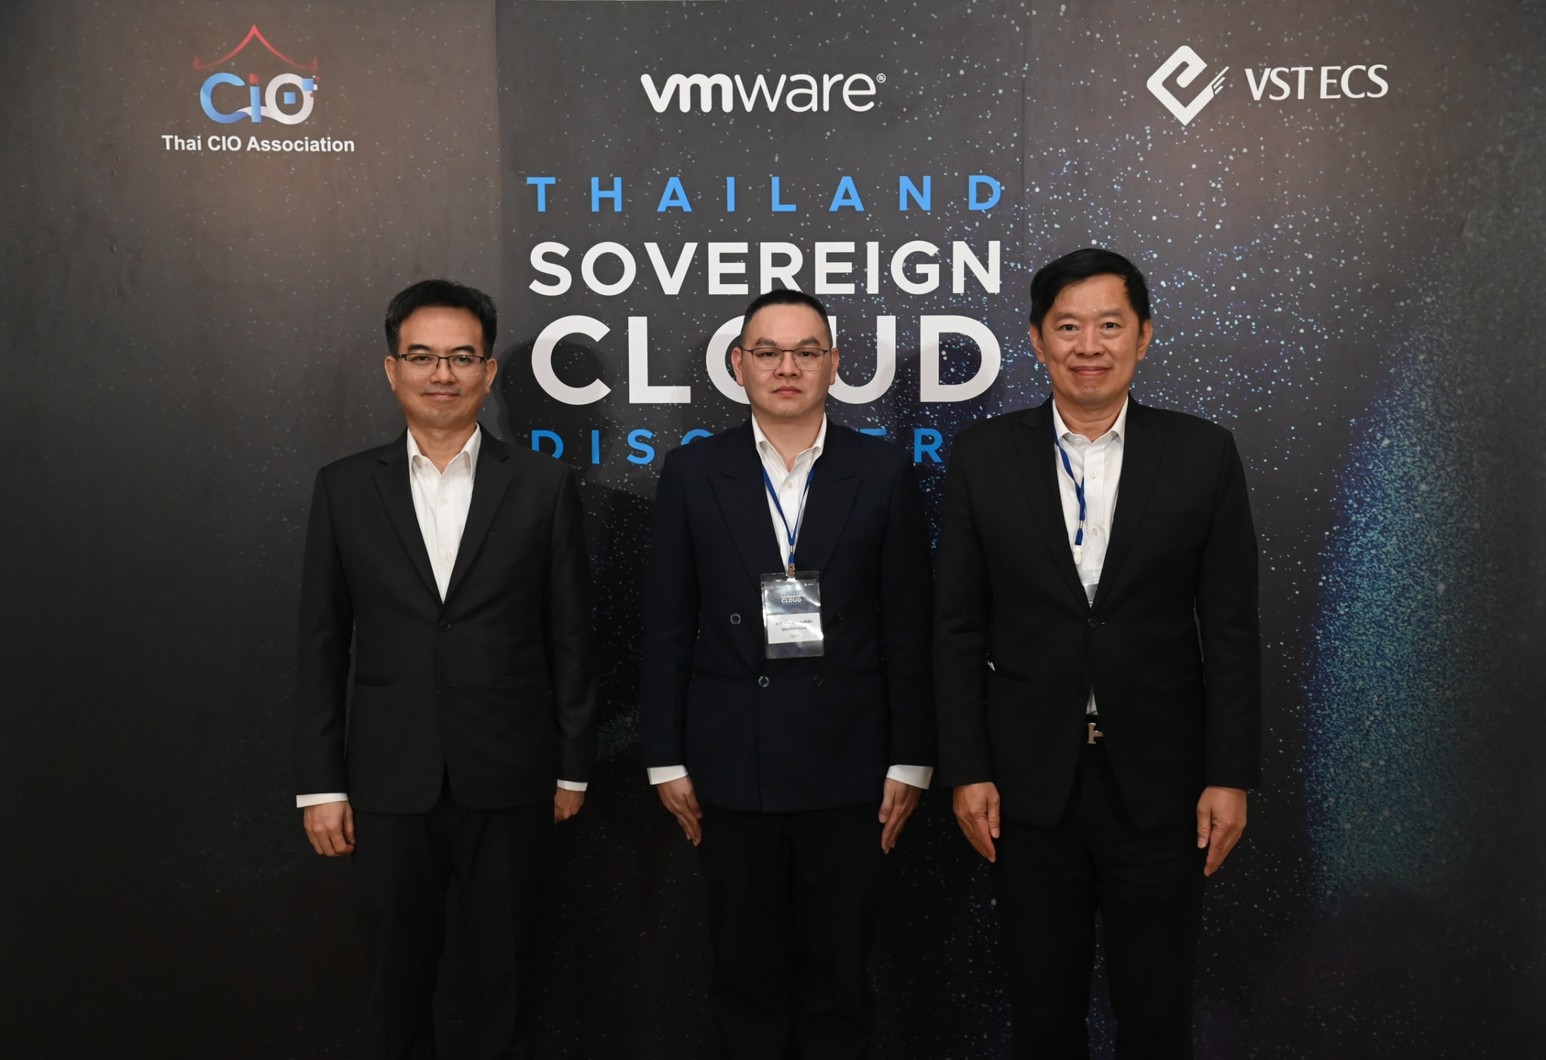 NT ชูเทคโนโลยี Sovereign Cloud  ในงาน Thailand Sovereign Cloud Discovery เตรียมความพร้อมหนุนประสิทธิภาพรักษาความปลอดภัยของข้อมูลได้สูงสุด